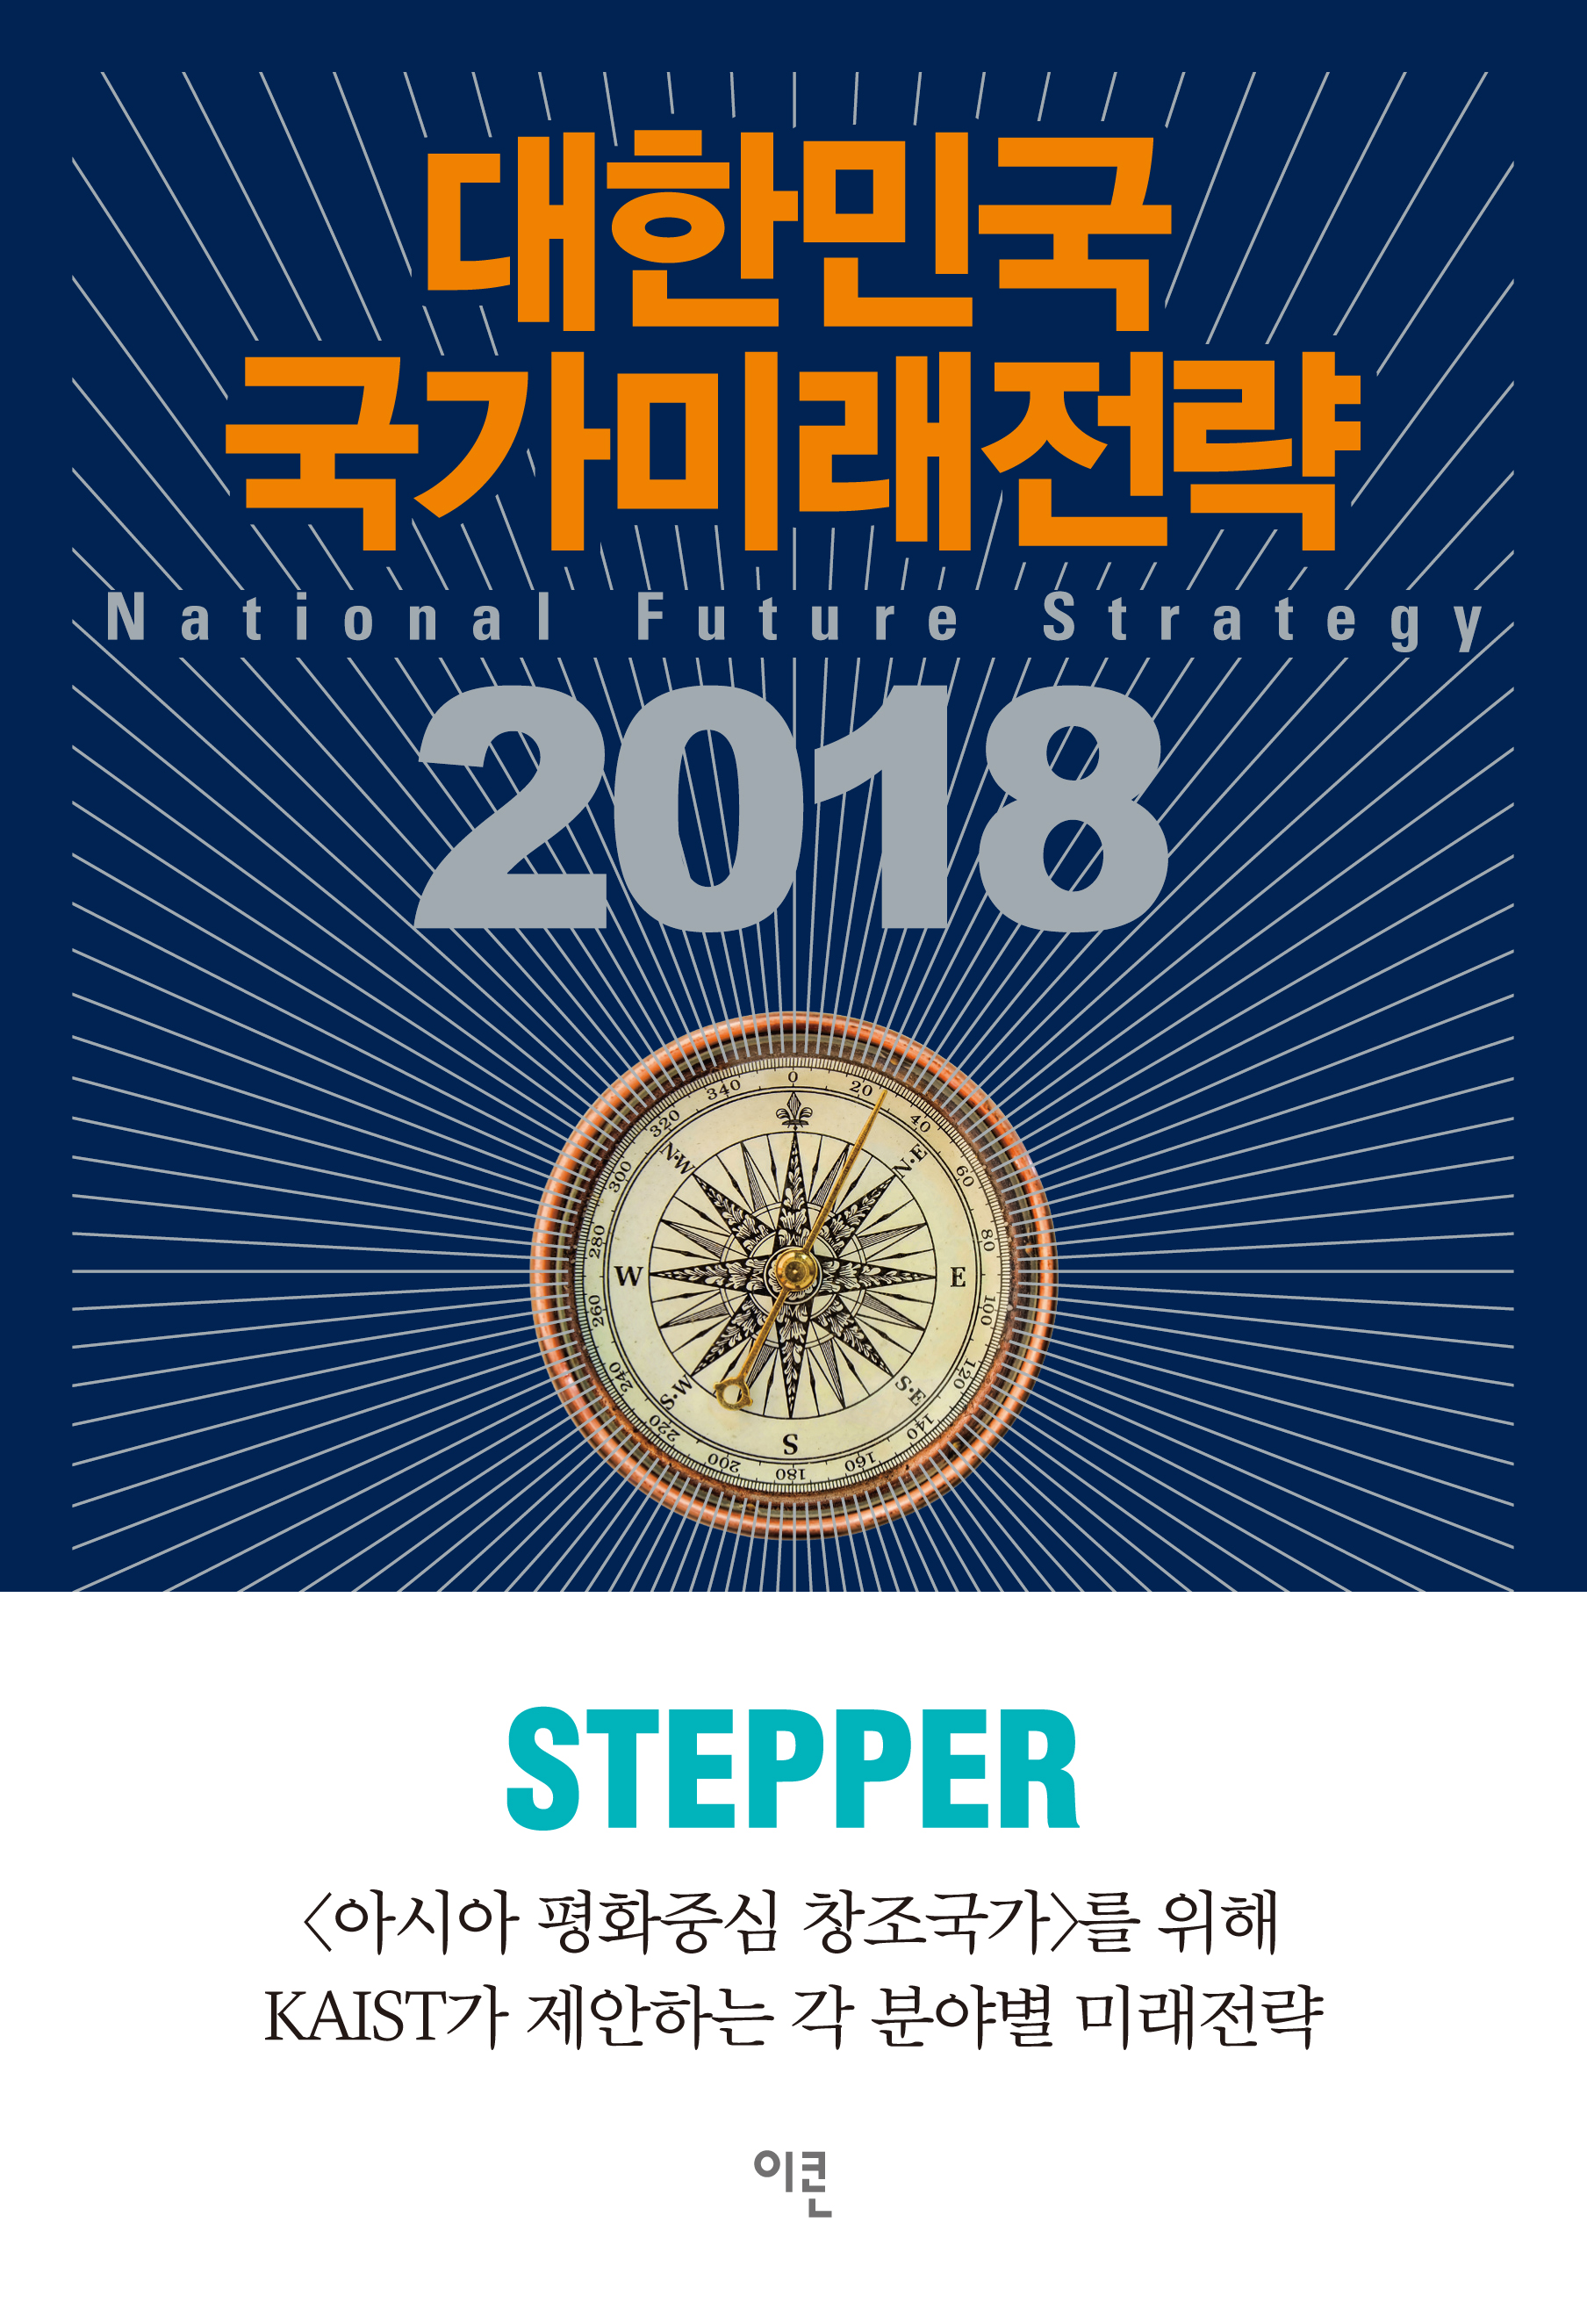 Korea National Future Strategy 2018